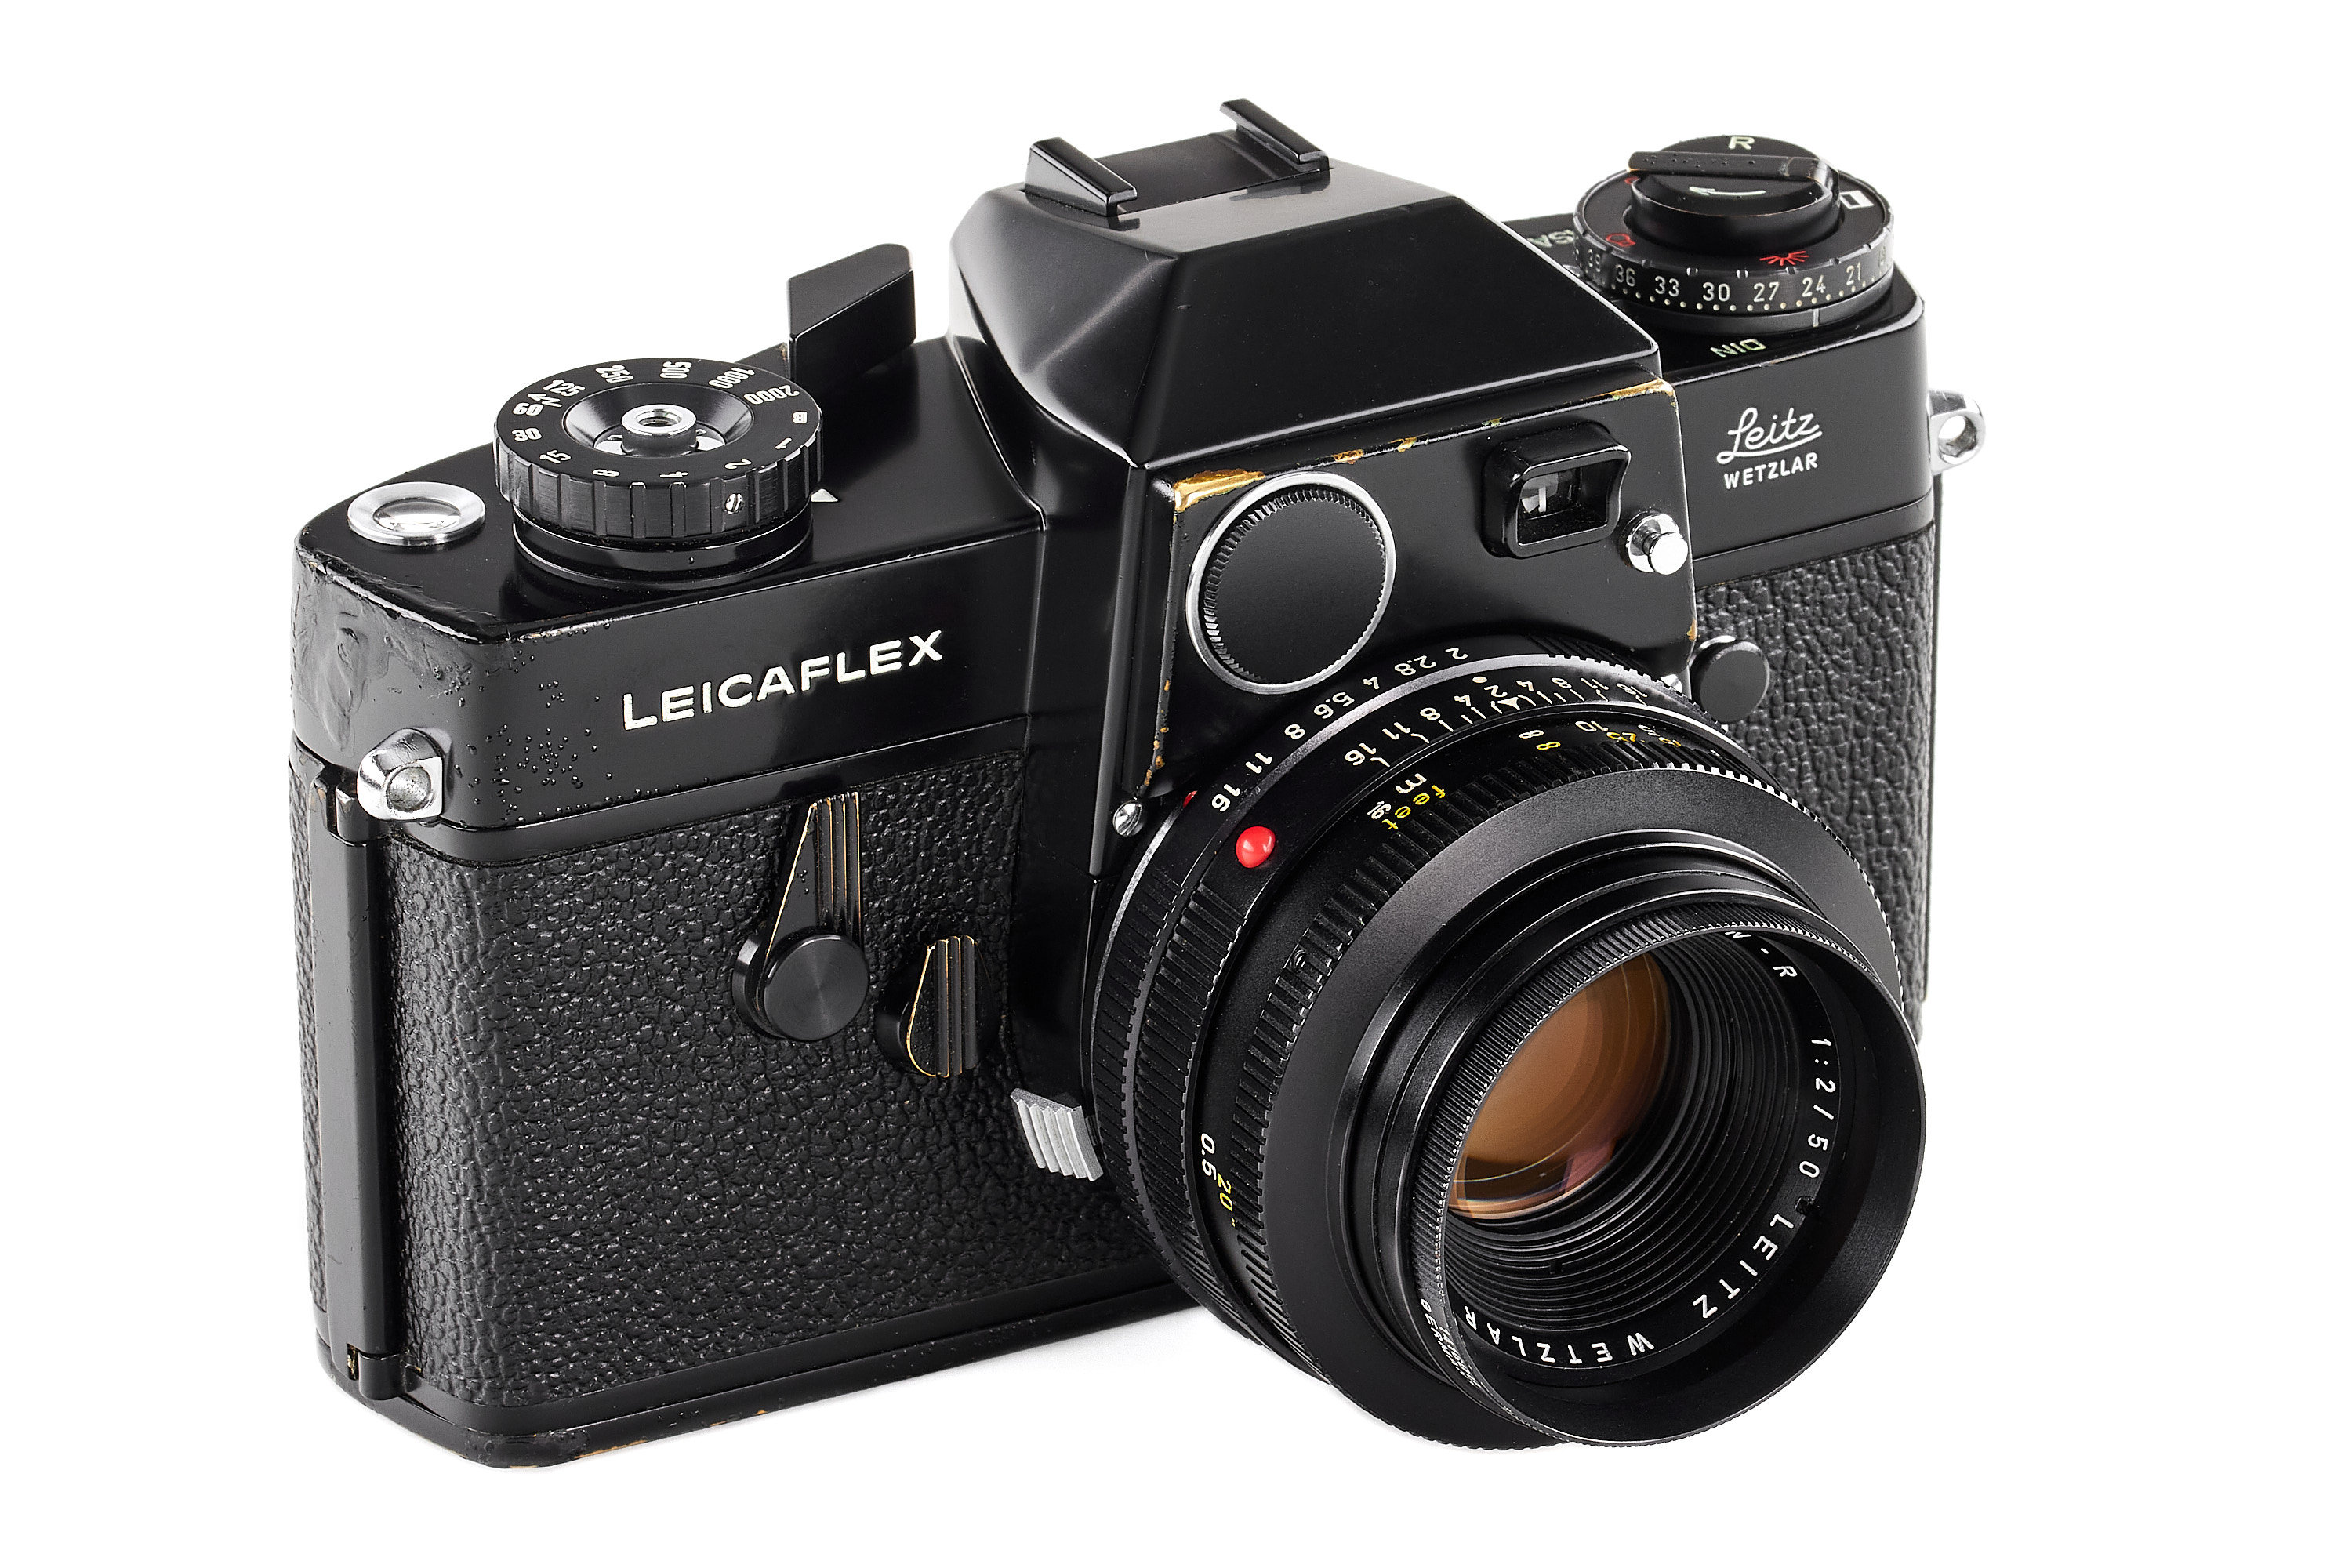 Leicaflex and Leica R System